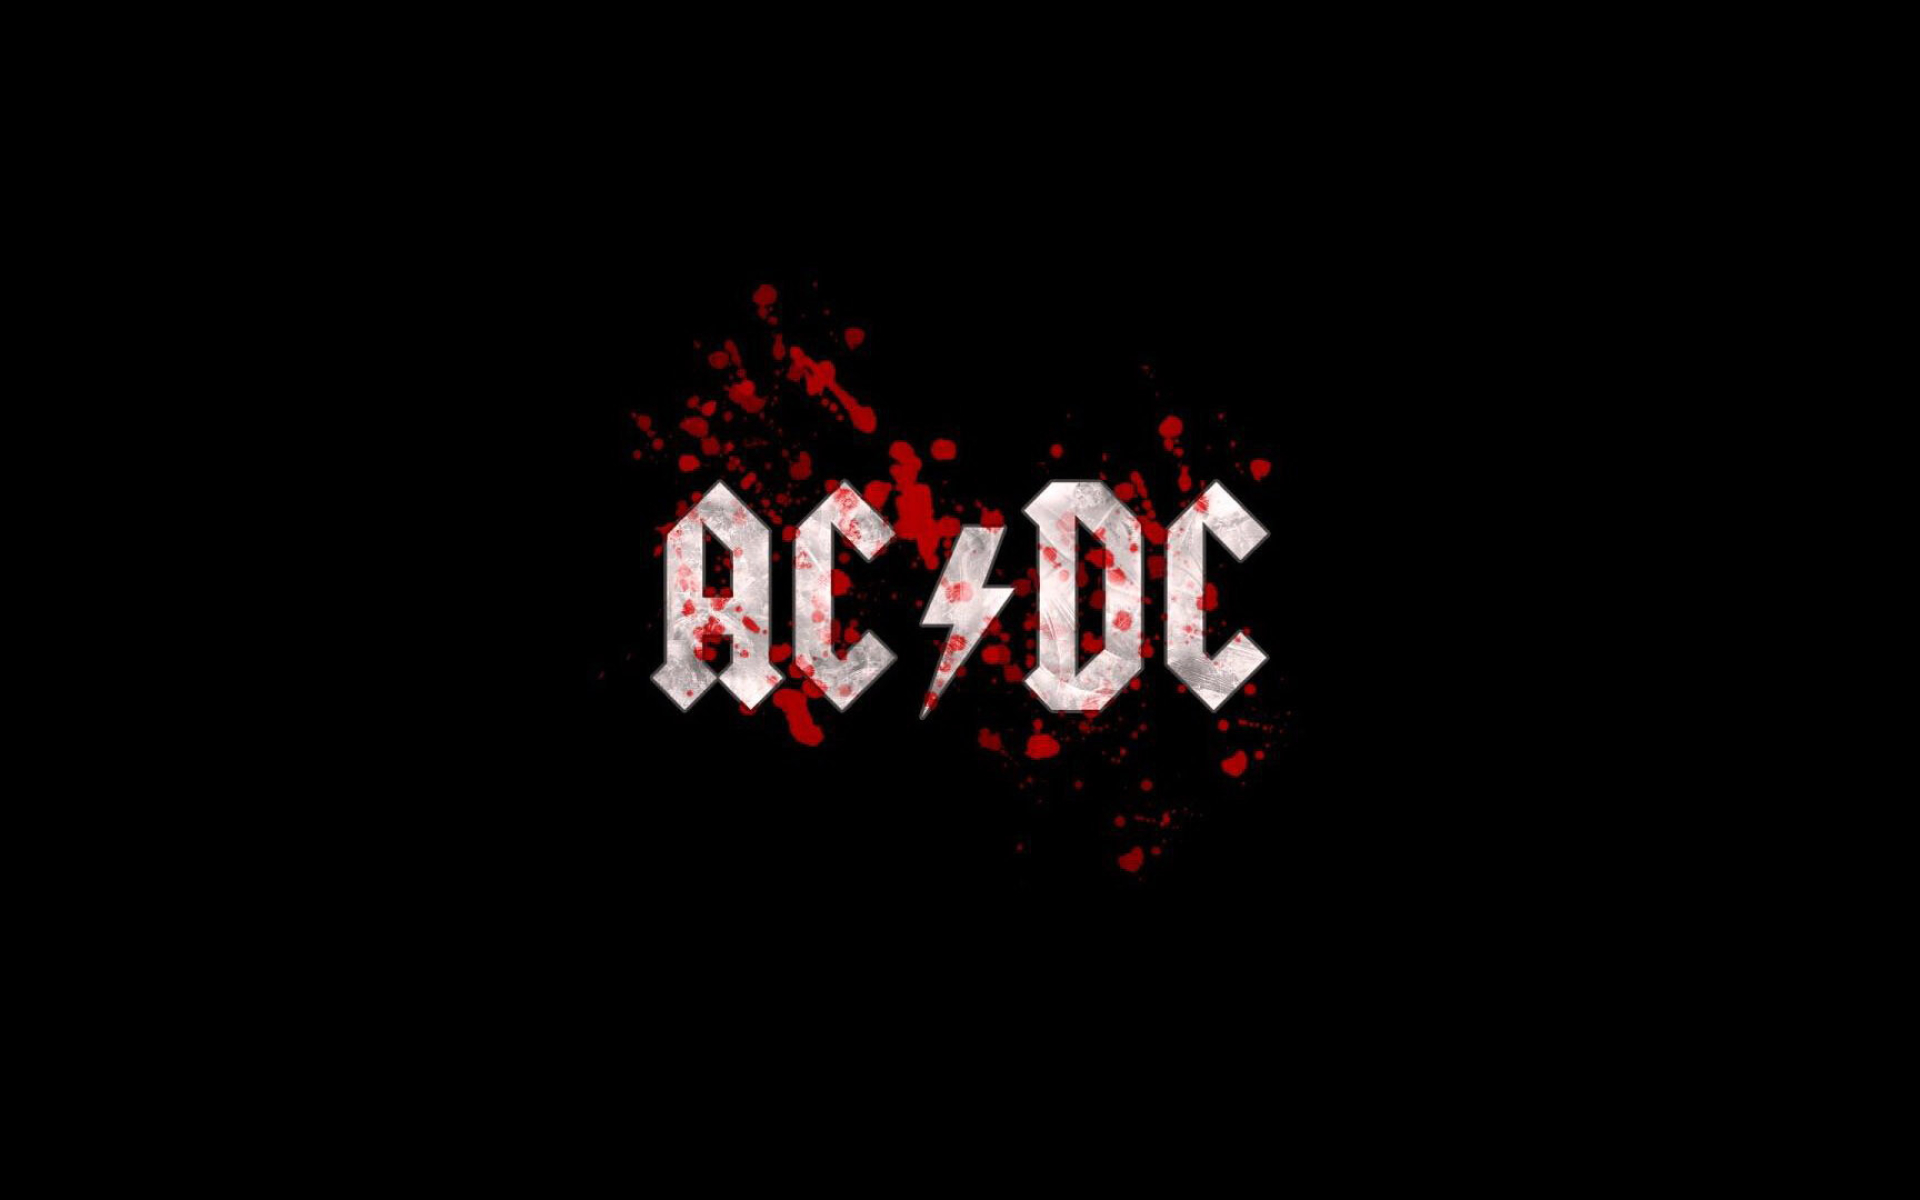 AC/DC Music Wallpaper, Ultimate Display, High-Quality Imaging, Rock and Roll Spirit, 1920x1200 HD Desktop